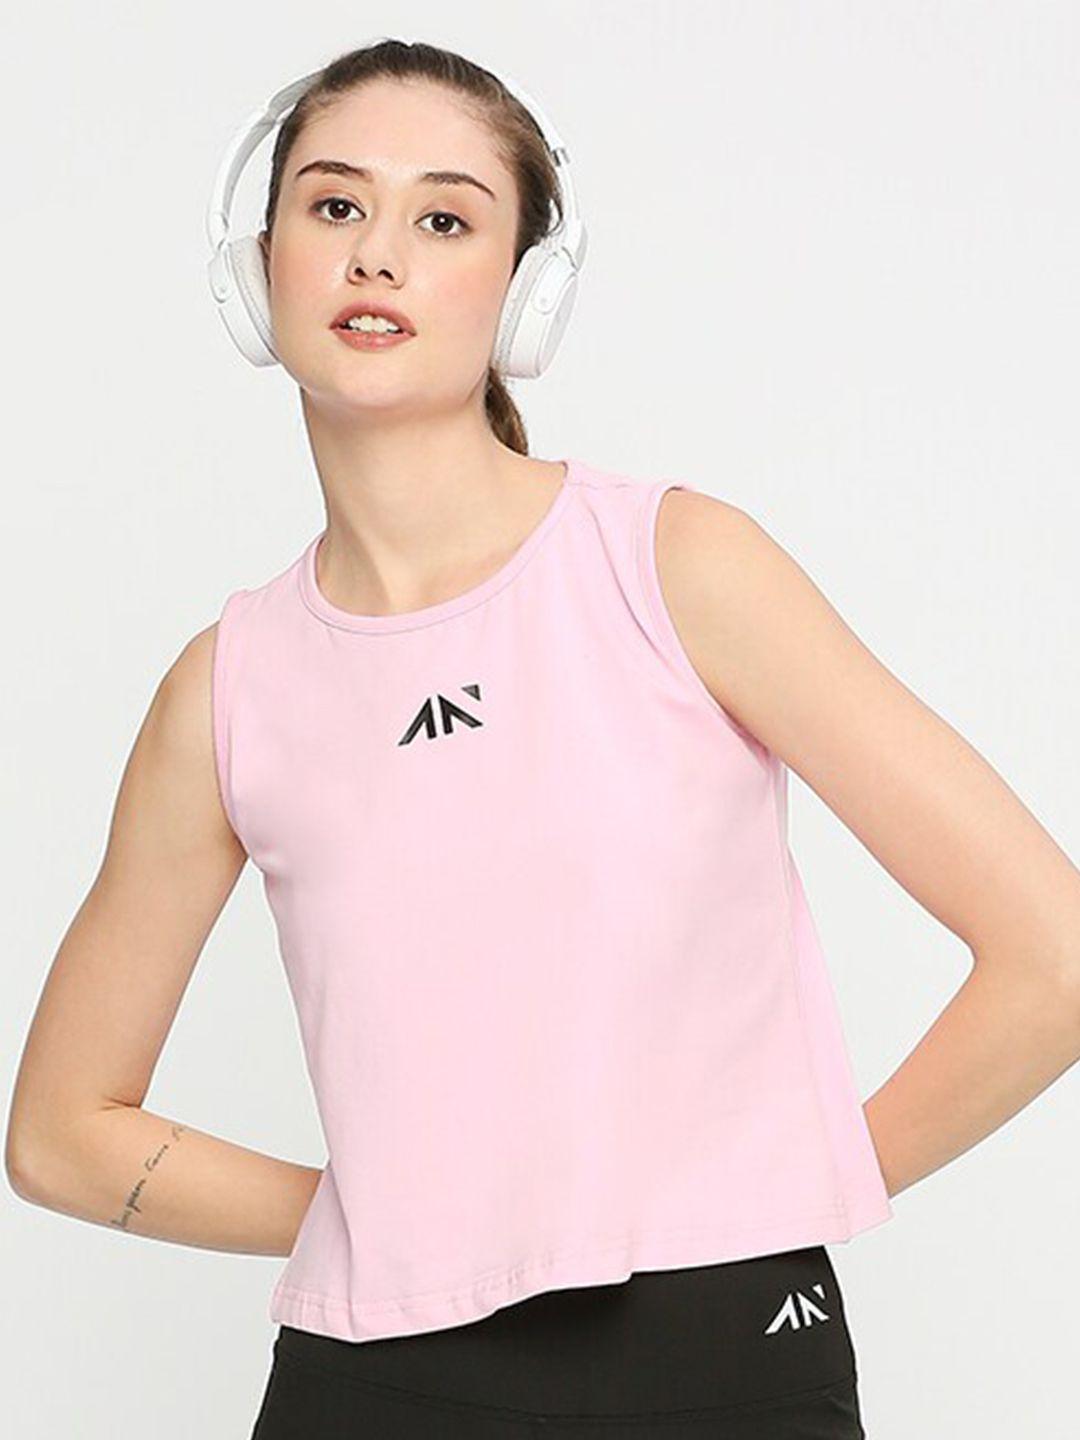 aesthetic nation sleeveless round neck sport t-shirt